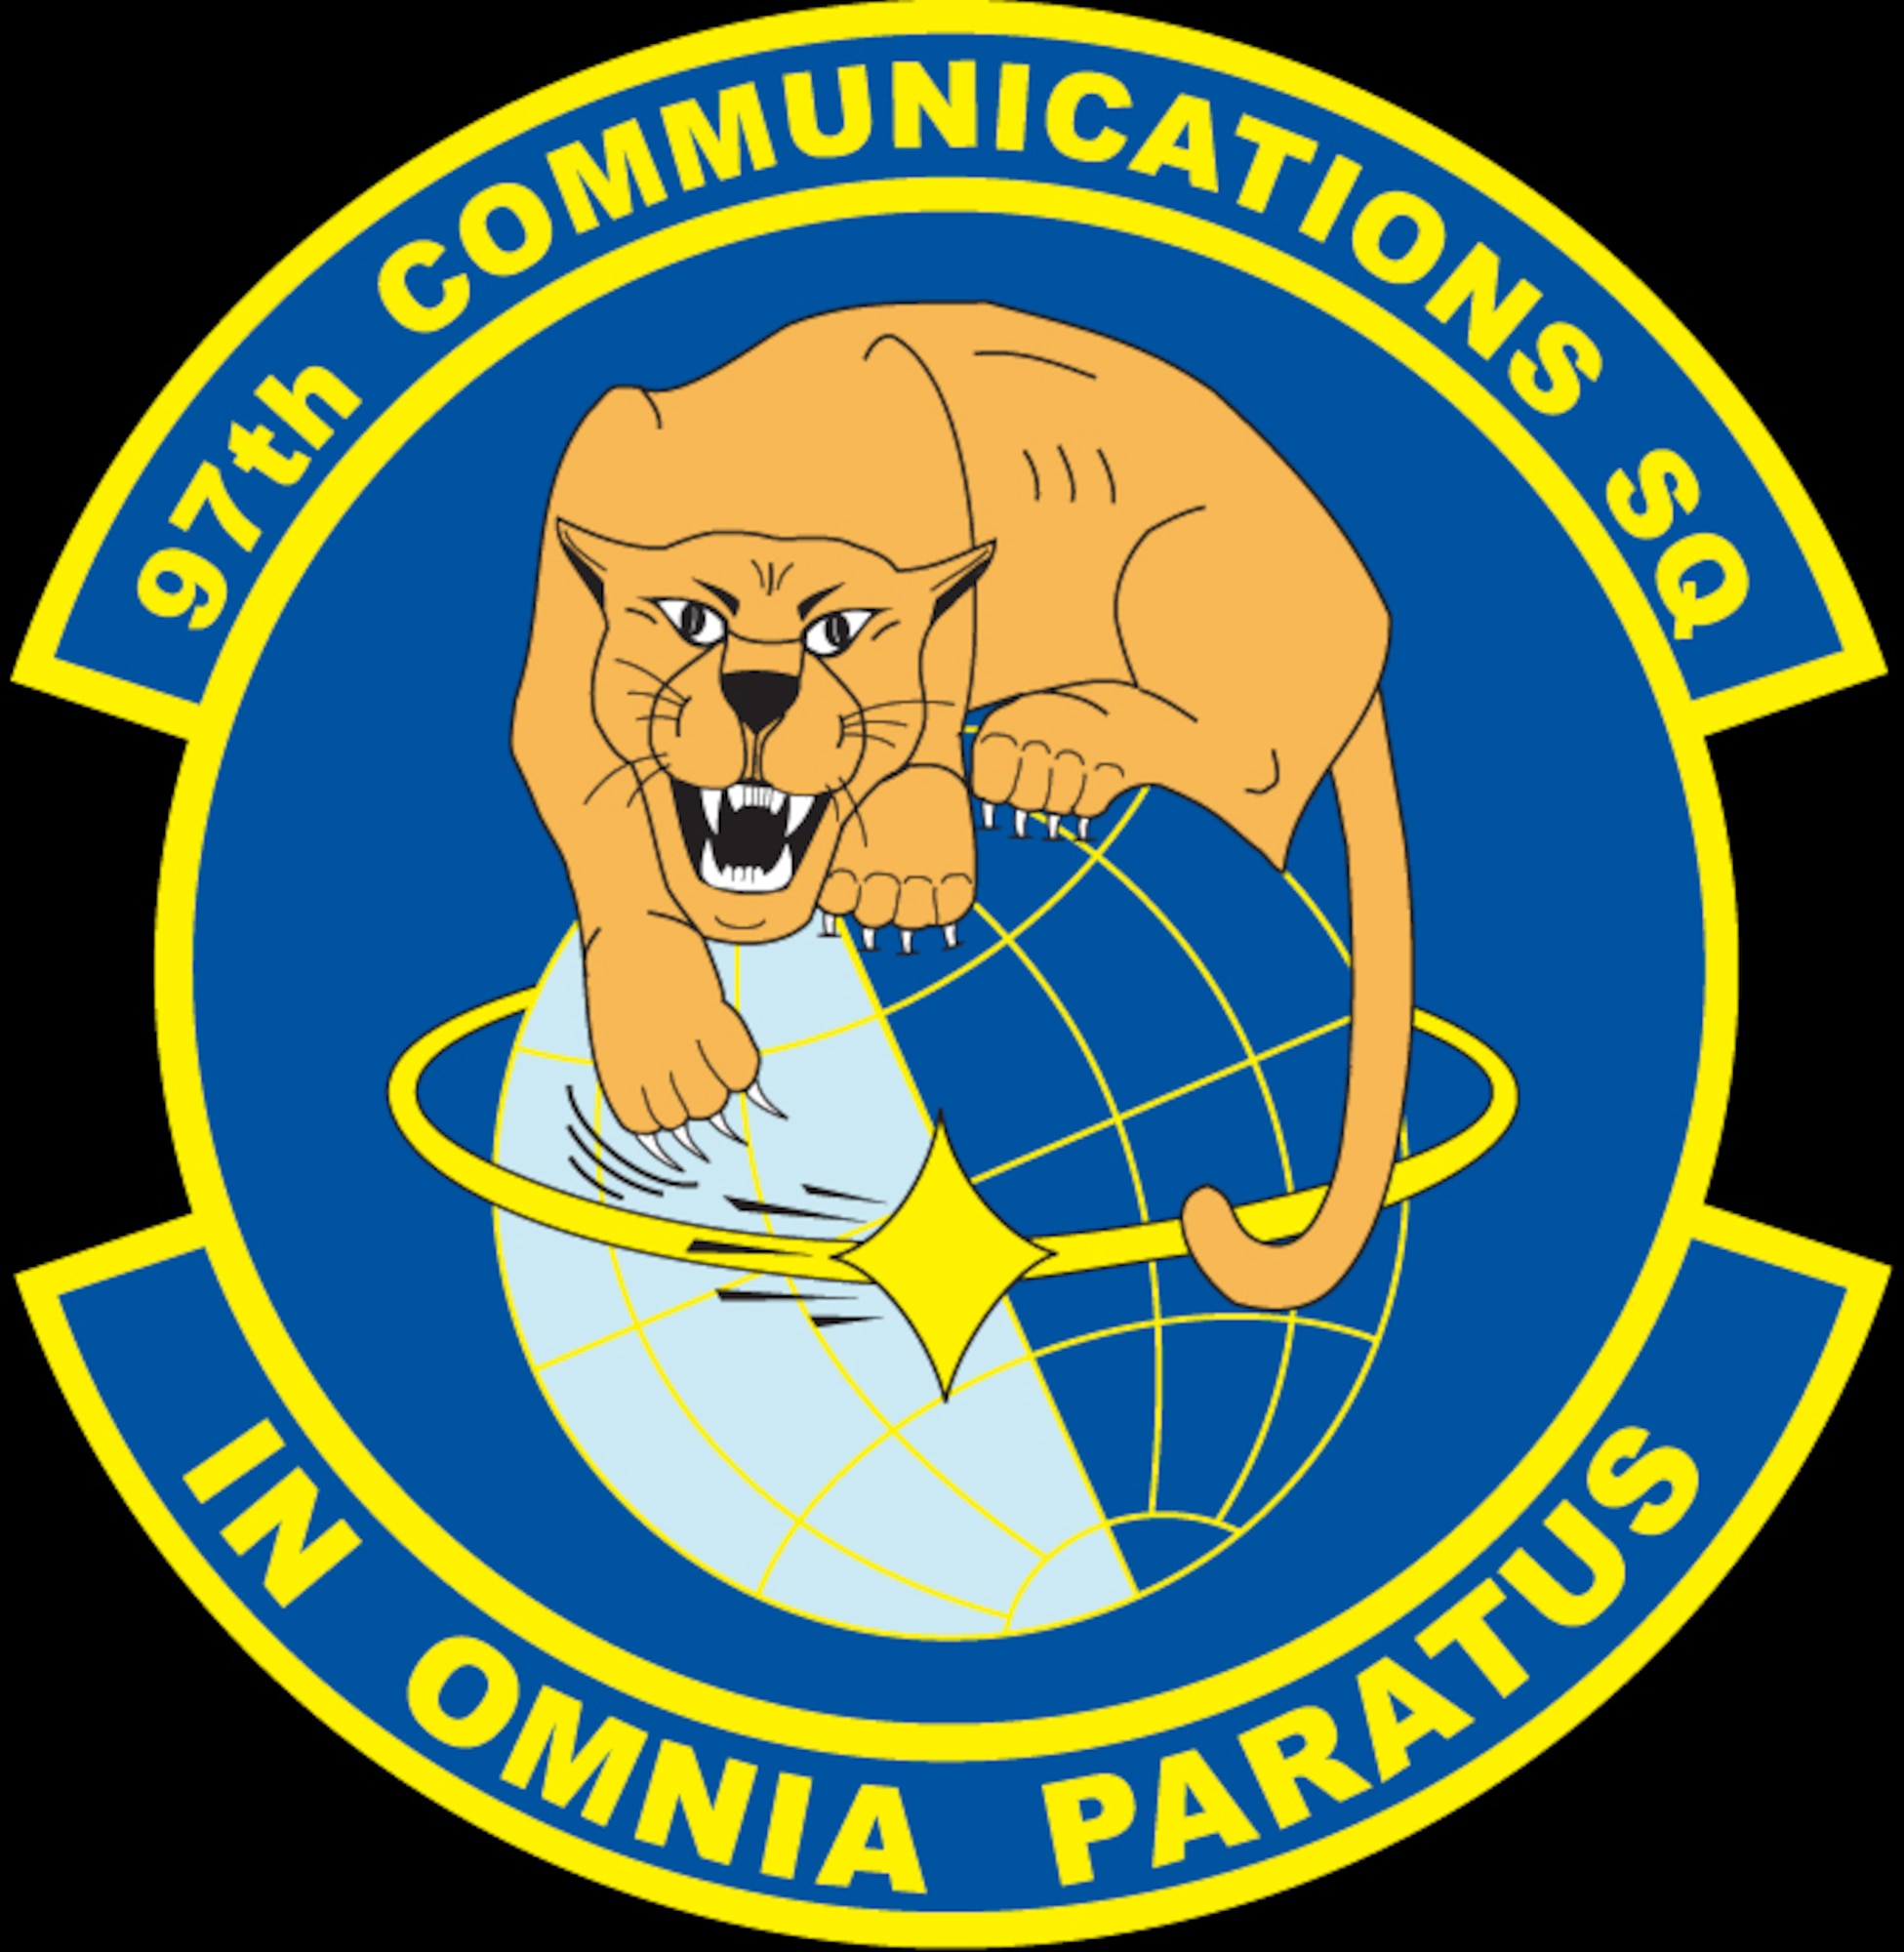 97th Communications Squadron